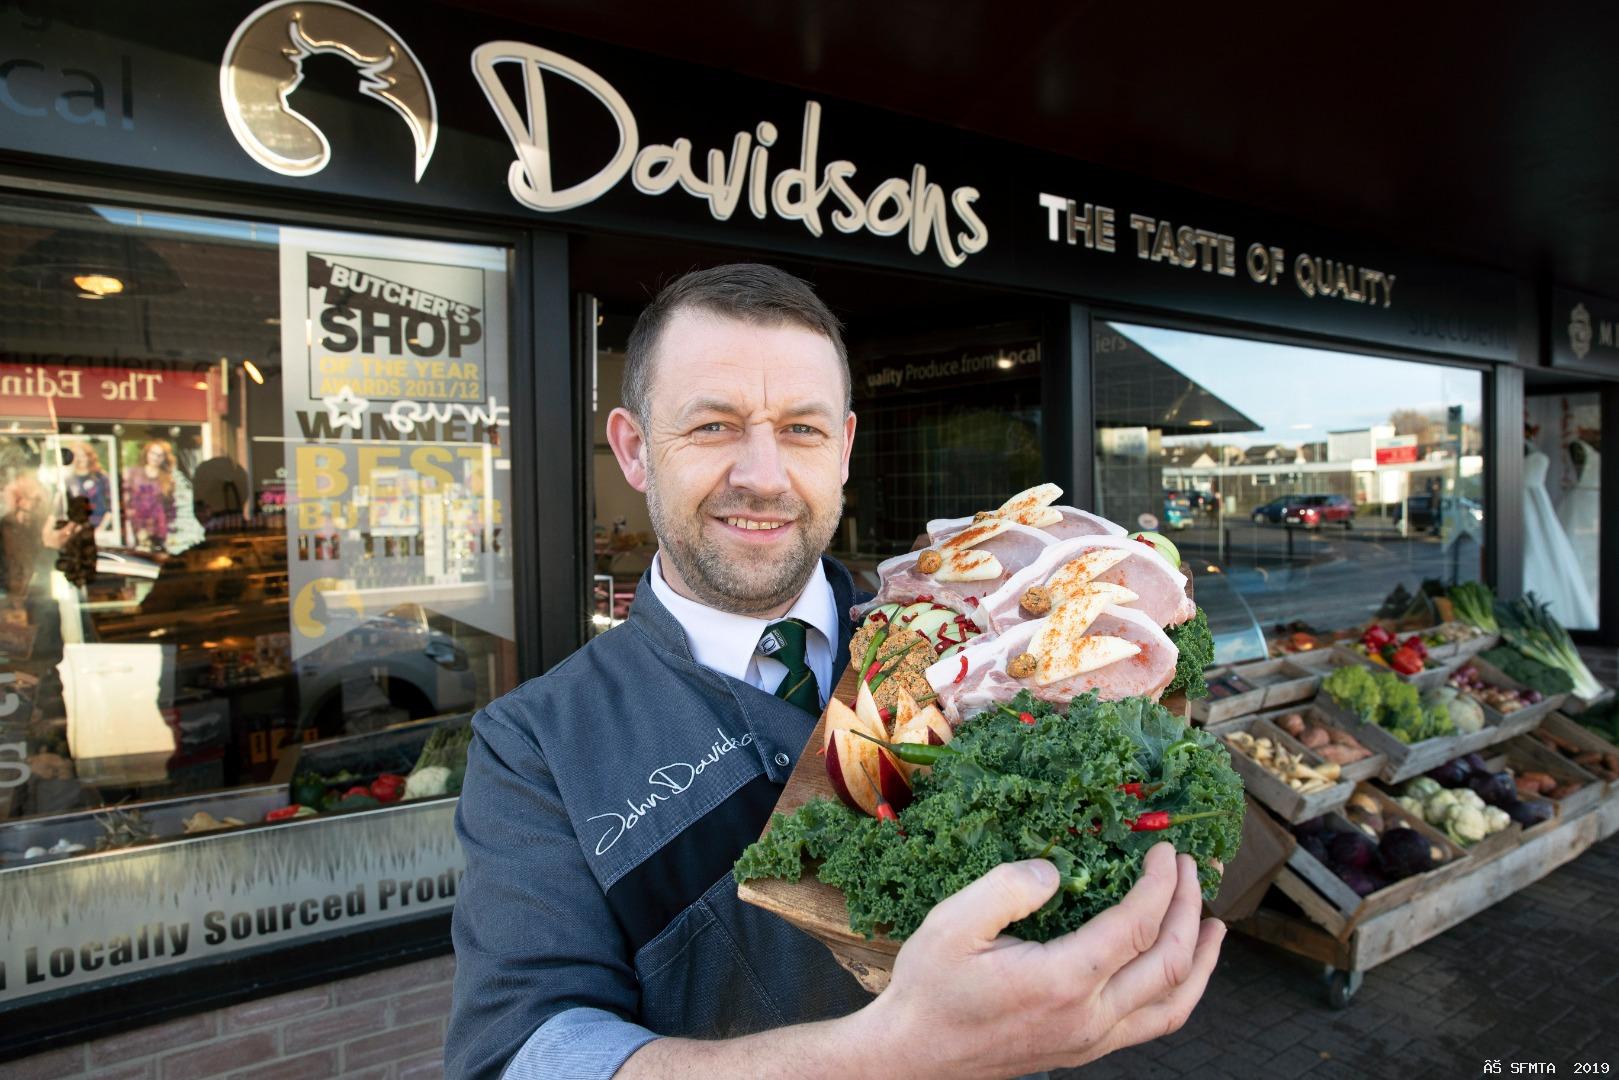 Pork Loin For Curing - John Davidsons